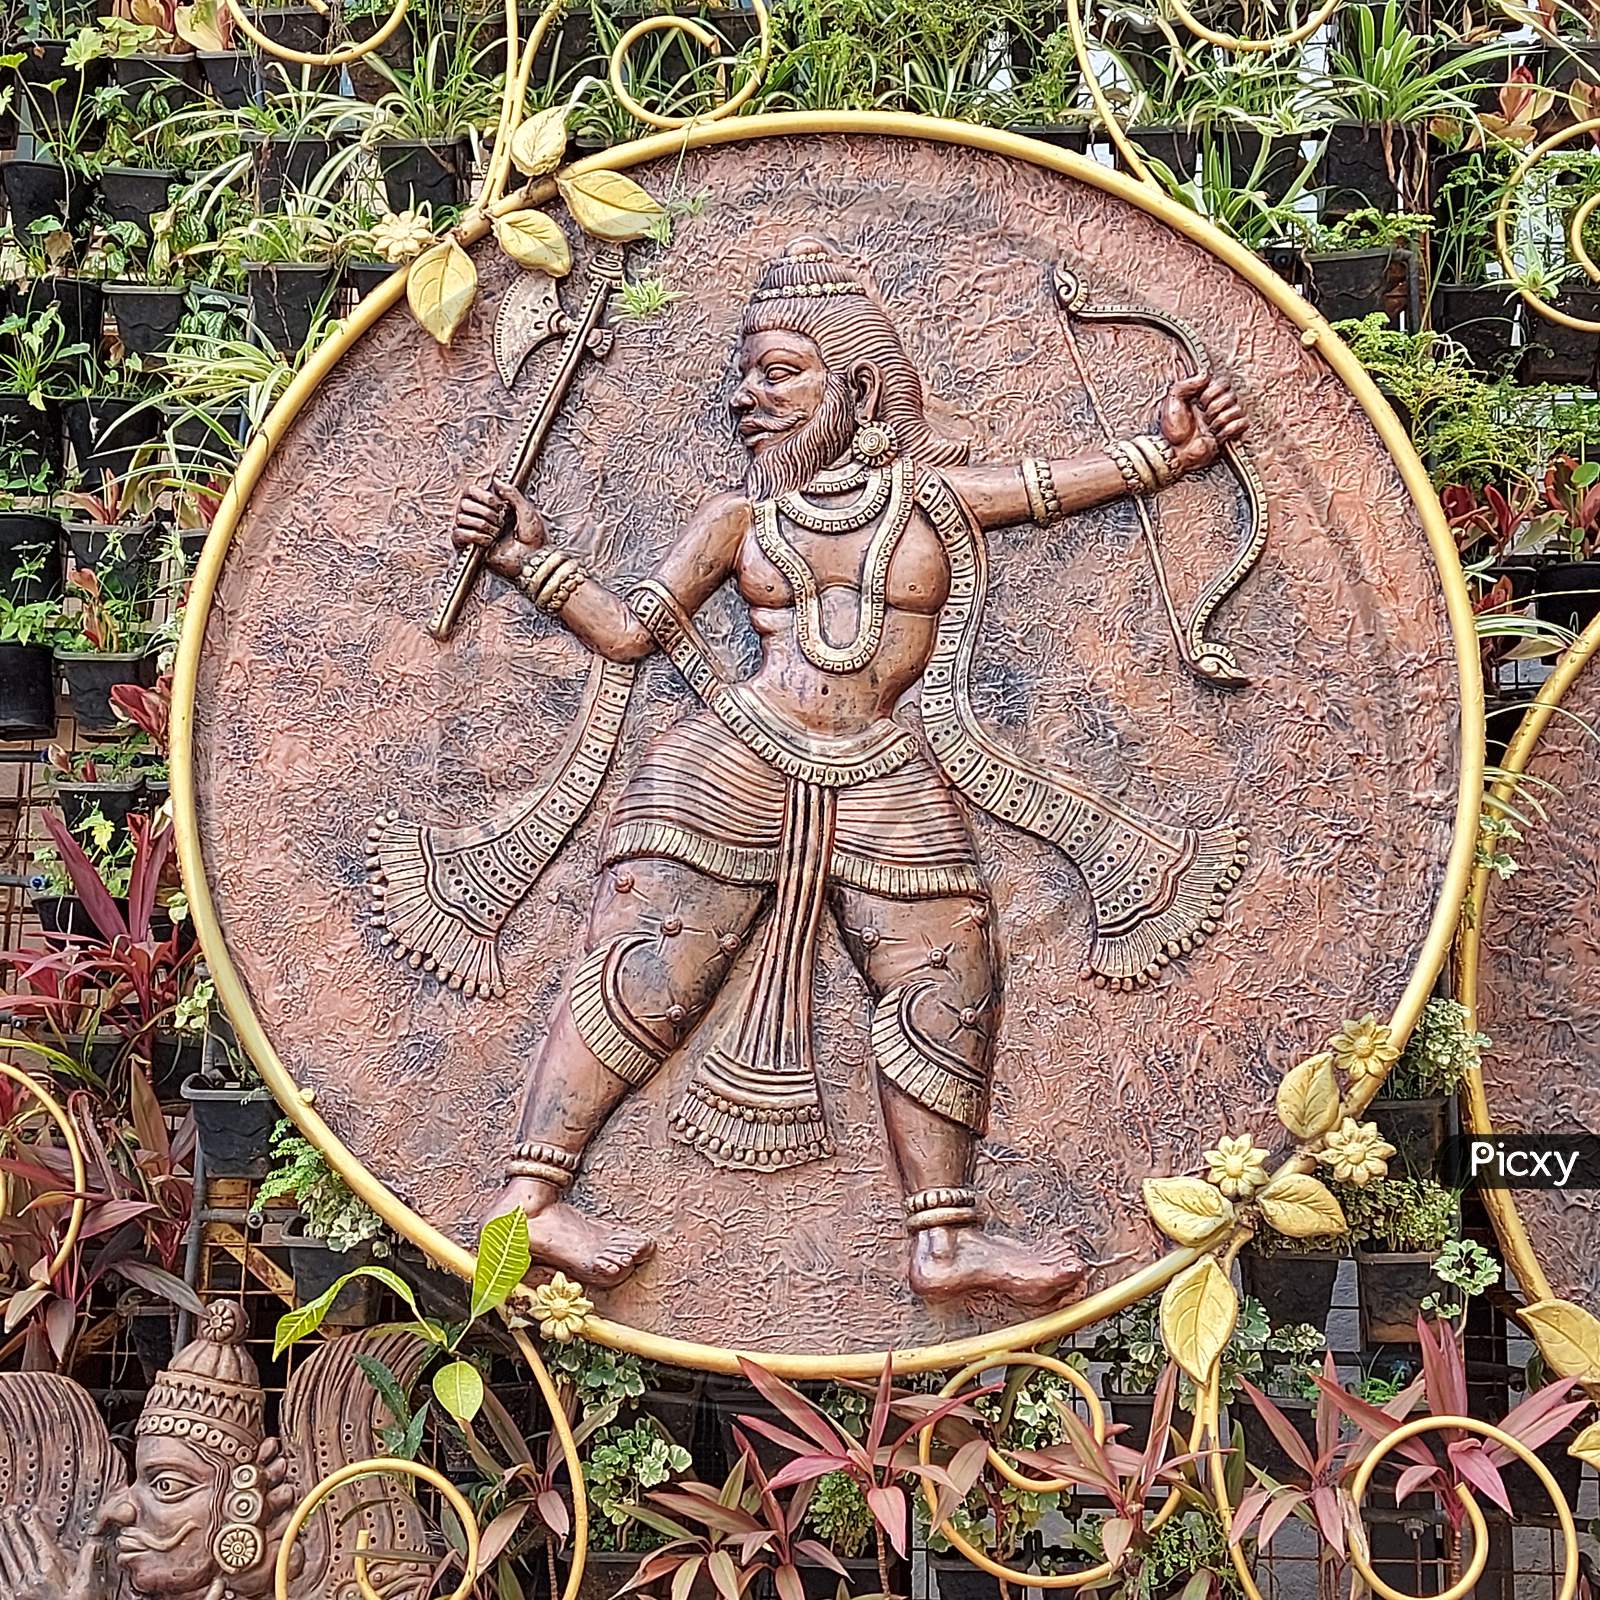 Sculptures at tirumala tirupati devasthanam temple. Hindu god sculpture. Parashurama